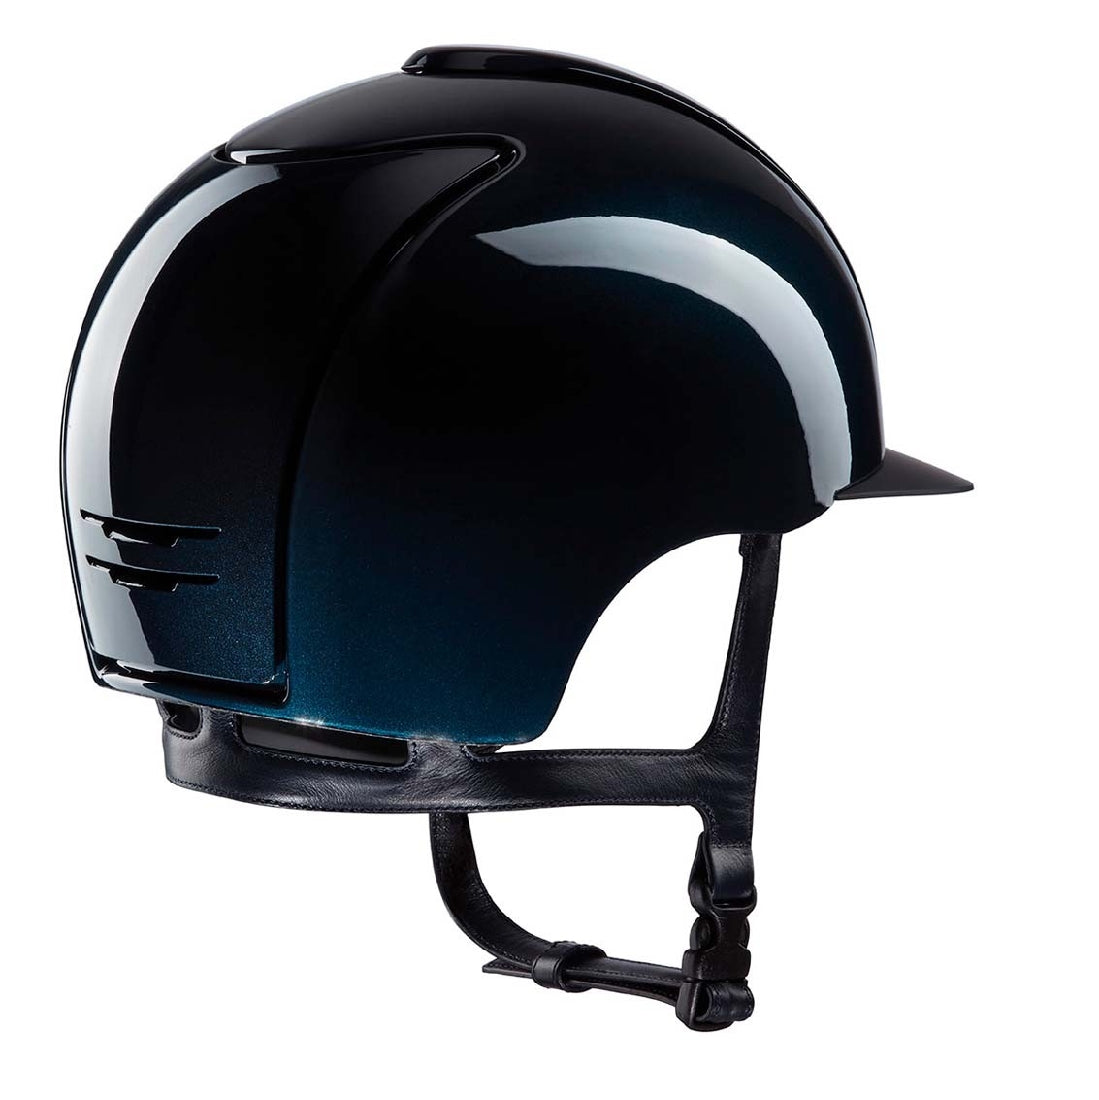 KEP equestrian helmet, black and blue, modern design, safety gear.